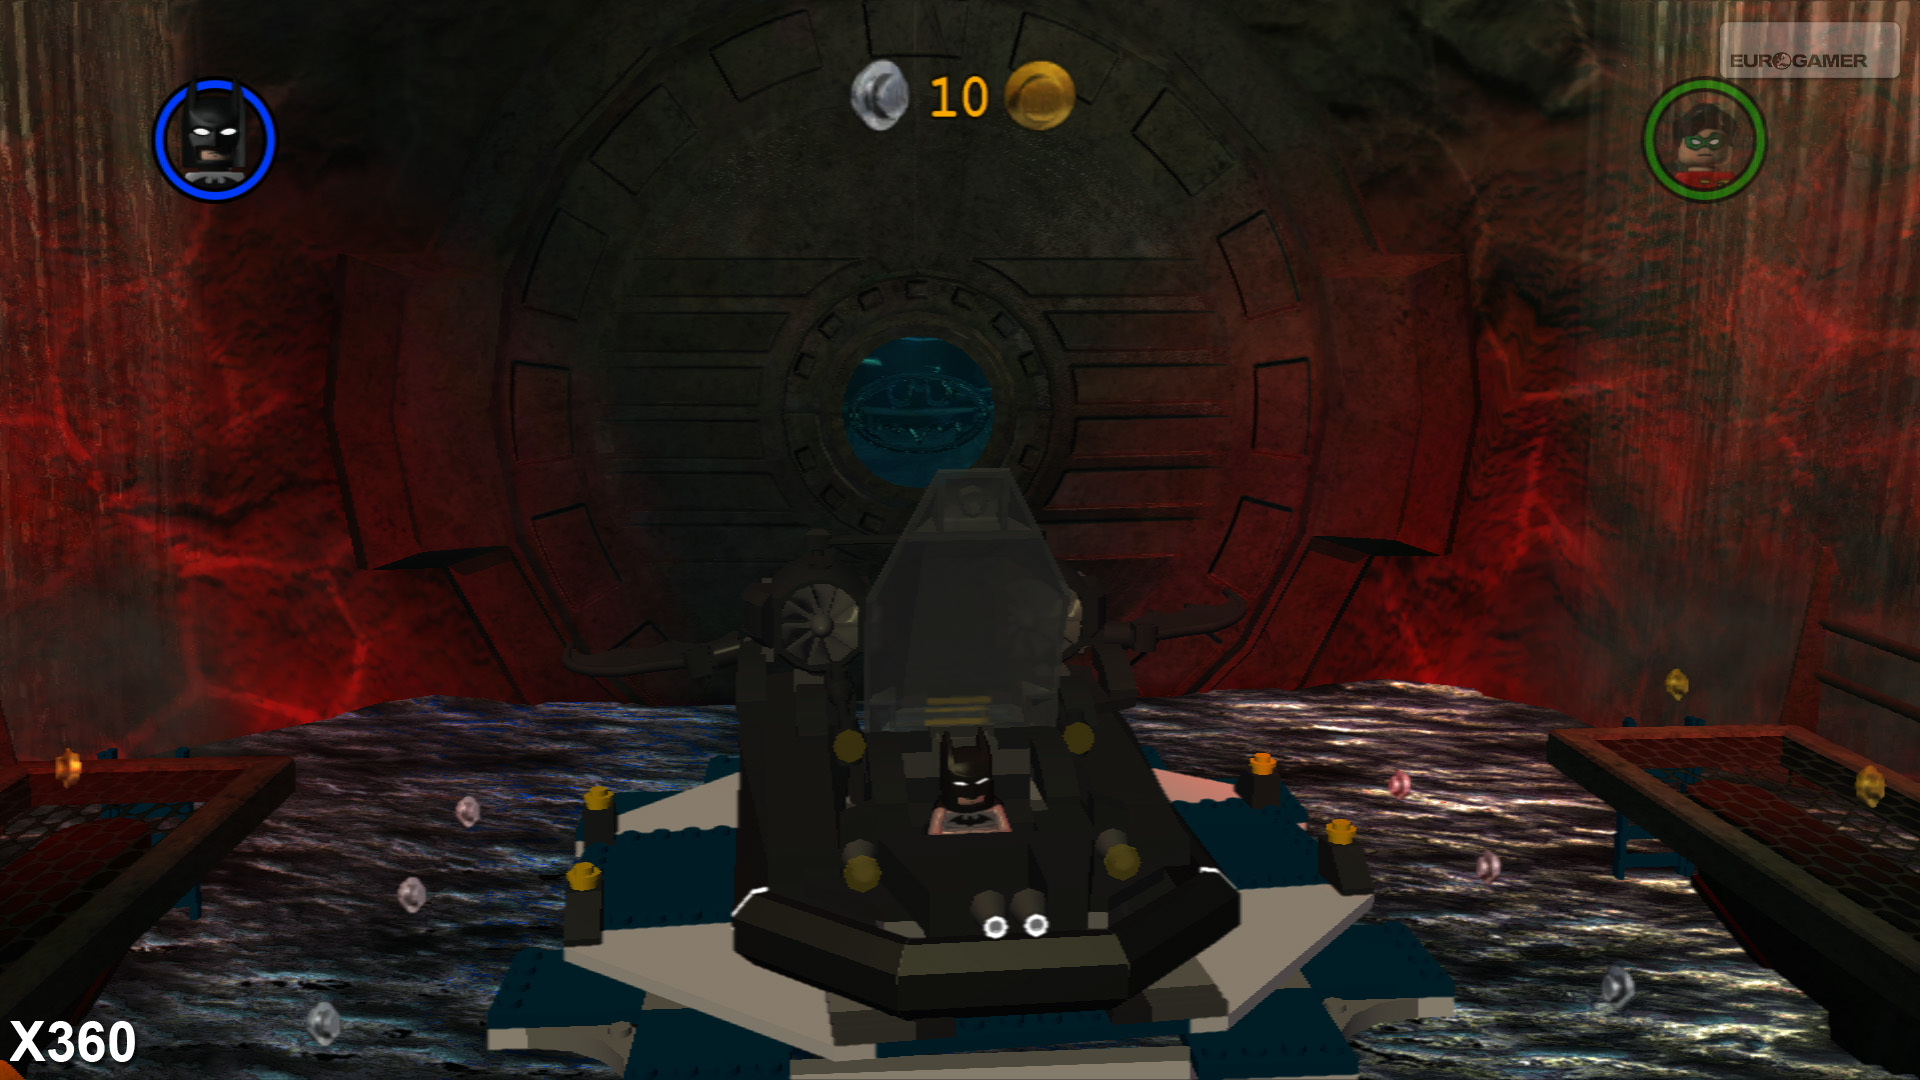 Lego Batman Desktop Wallpaper Of Video Game